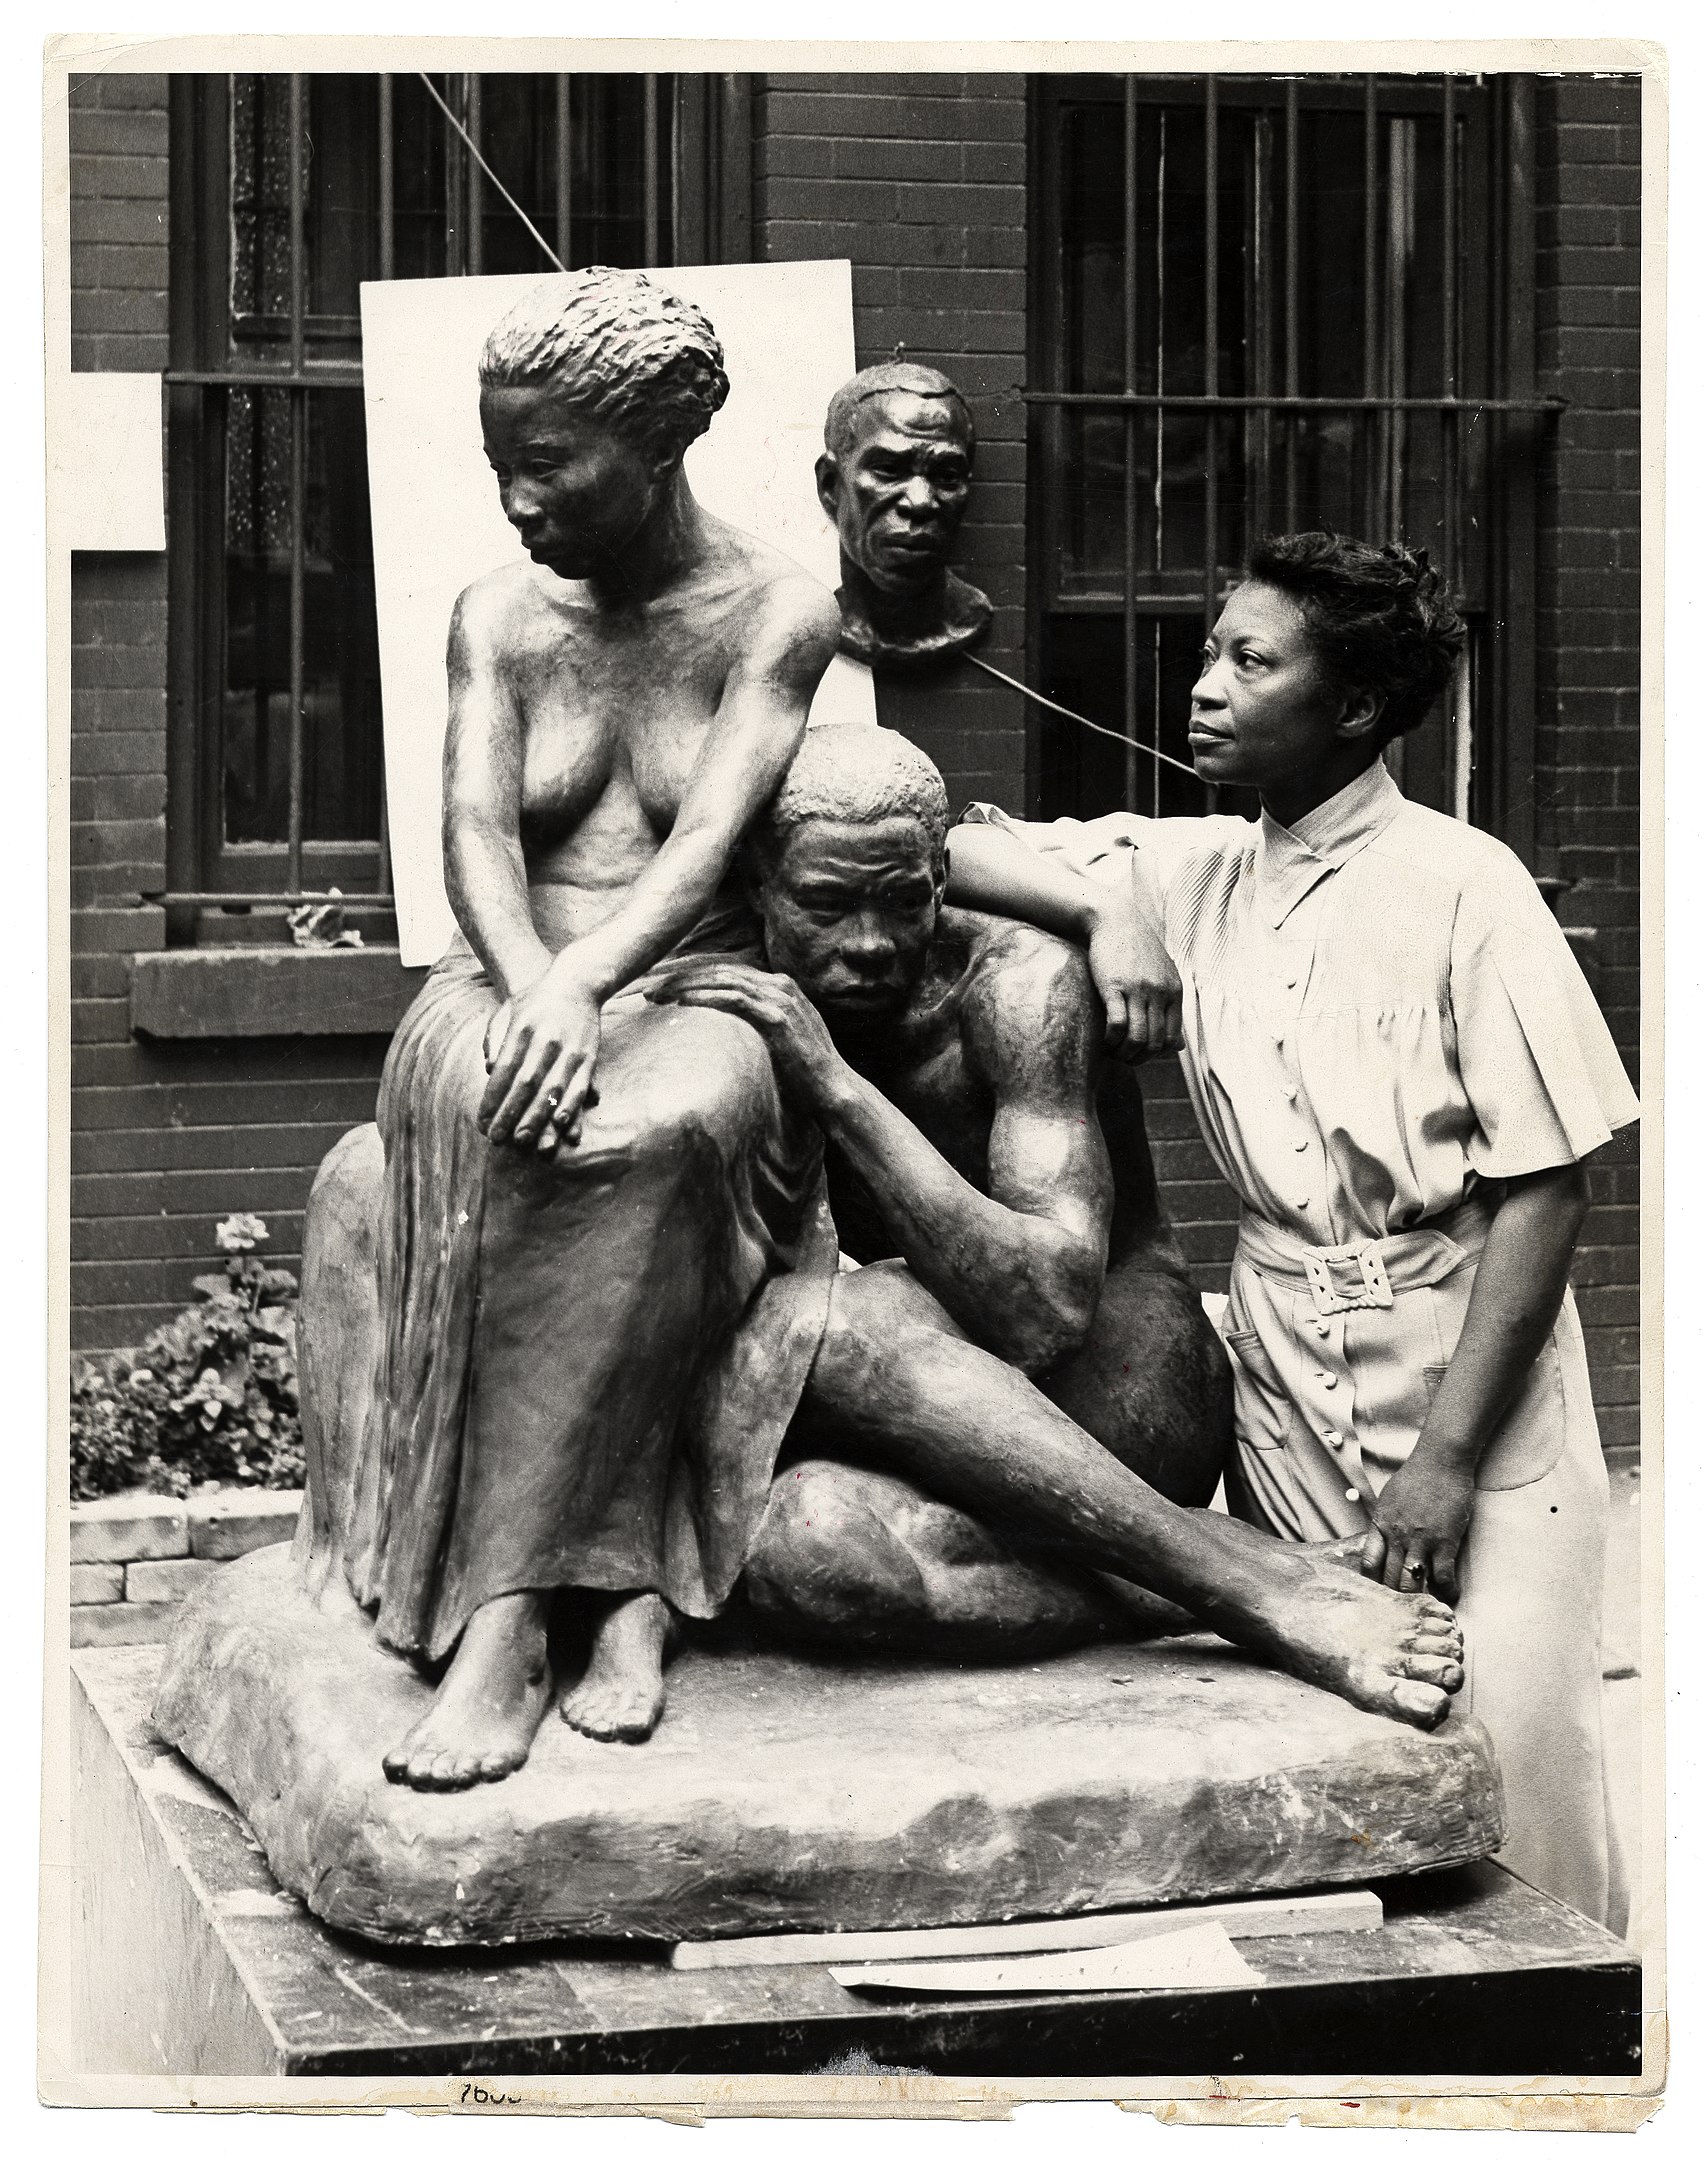 A photograph depicting an artist standing next to her figurative sculptures